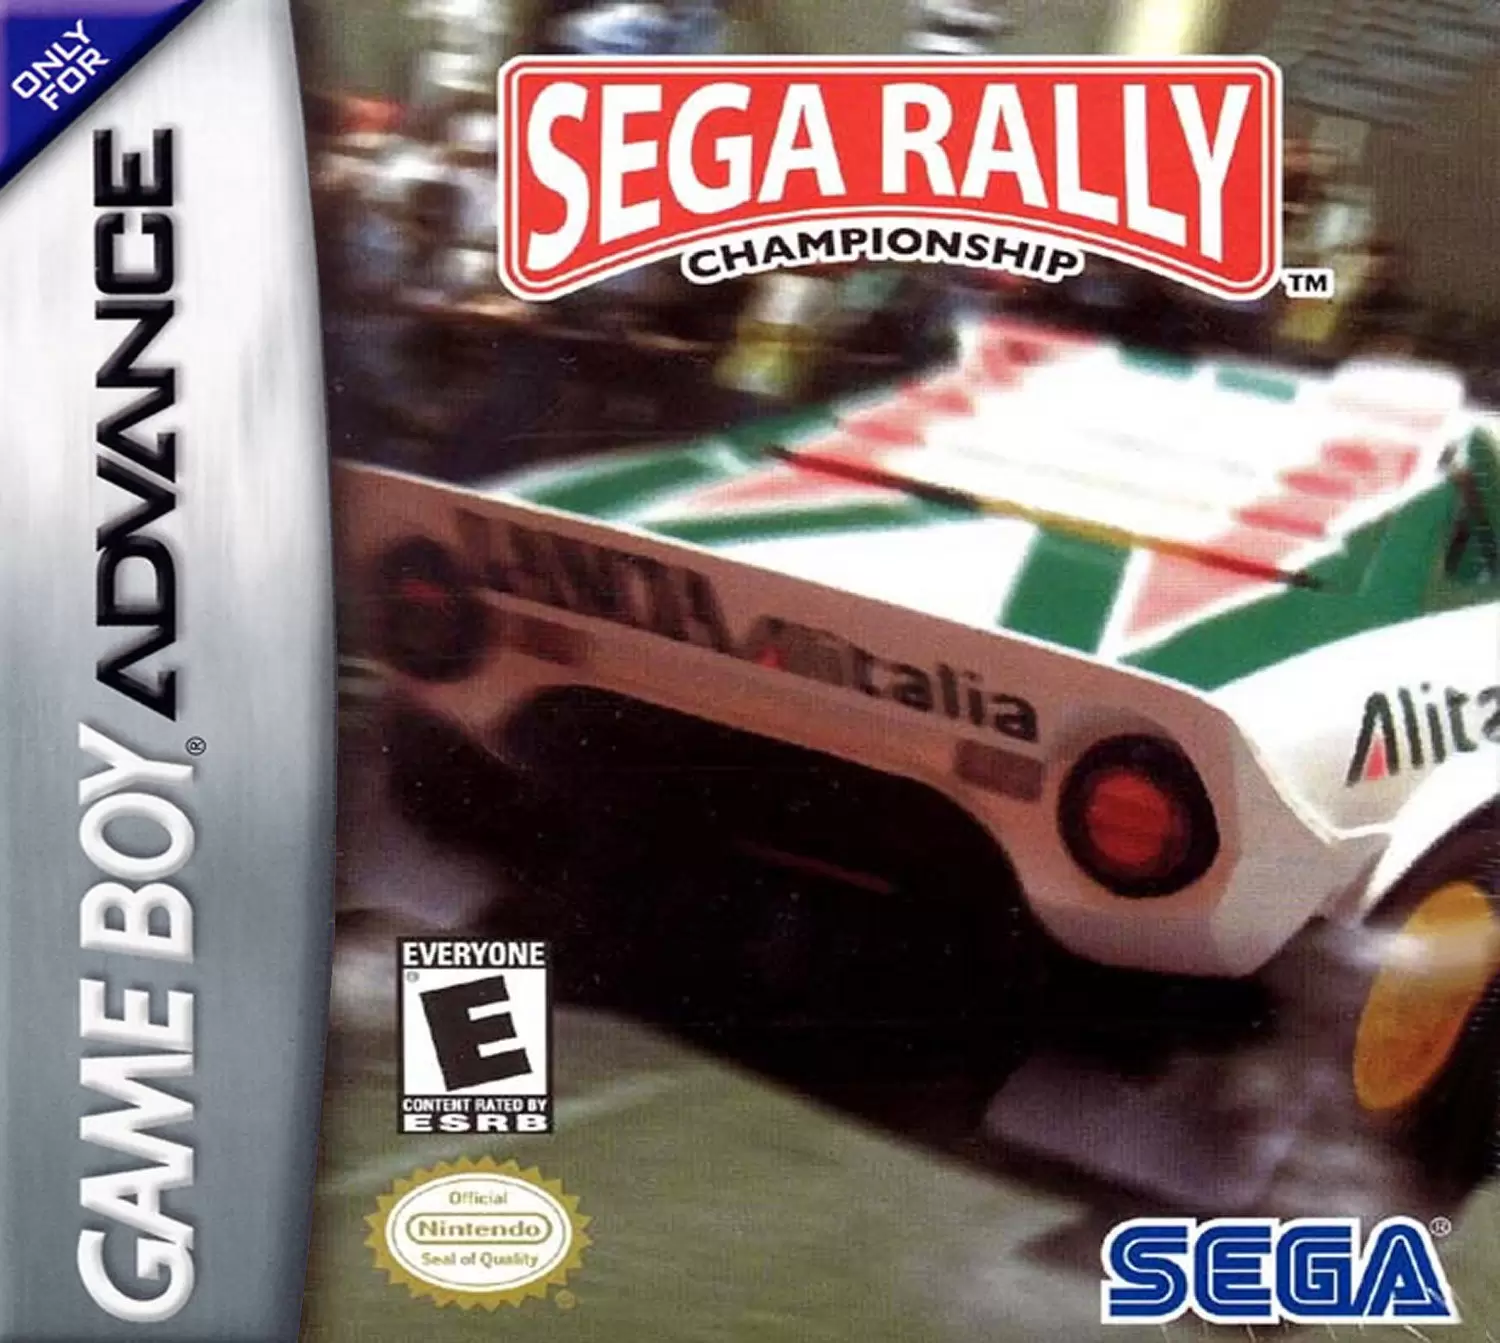 Game Boy Advance Games - Sega Rally Championship